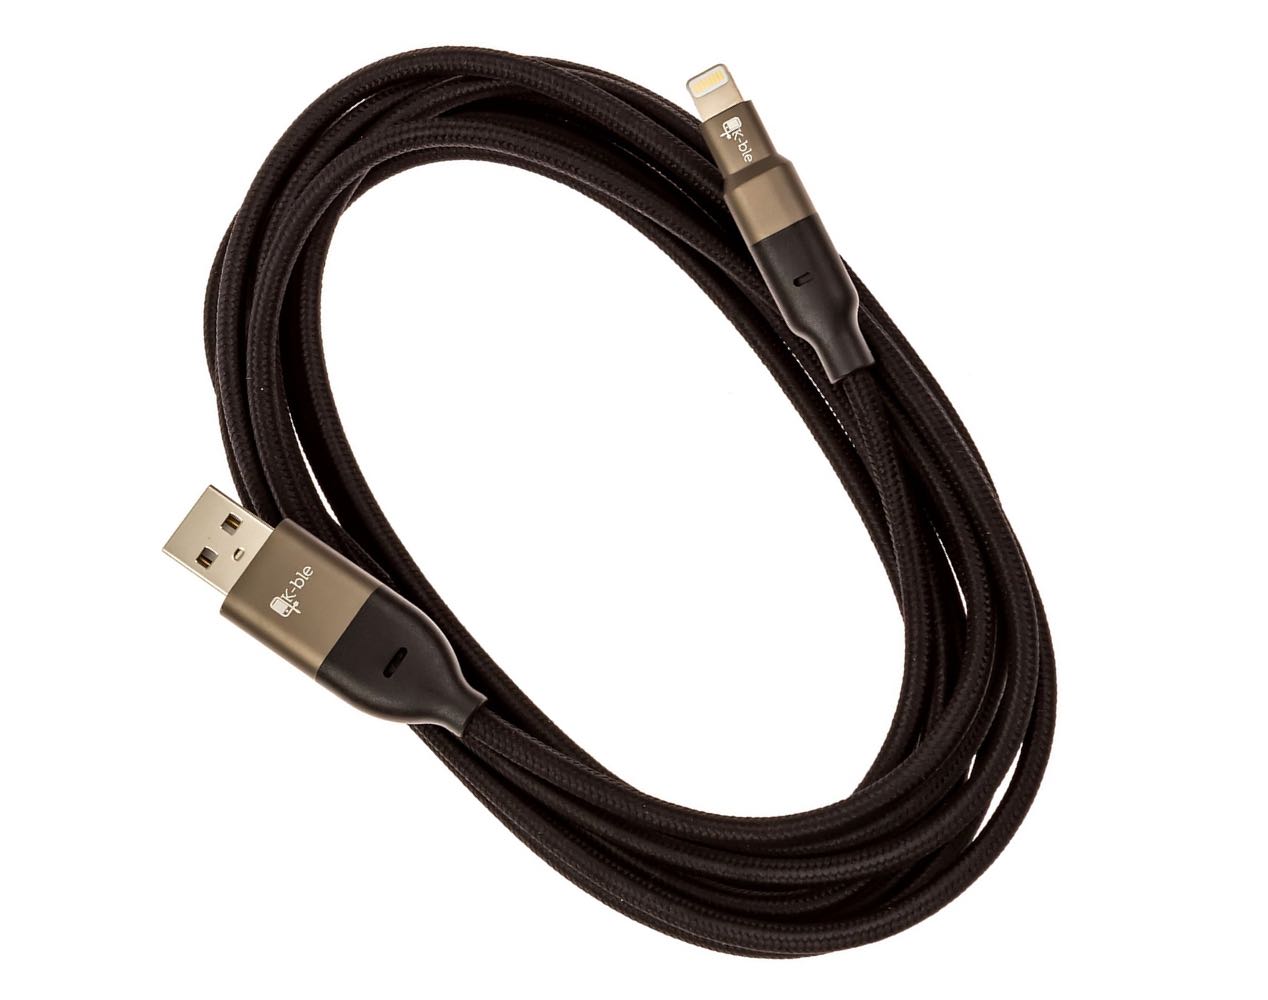 The K-ble X braided nylon Lightning cable. ($15)